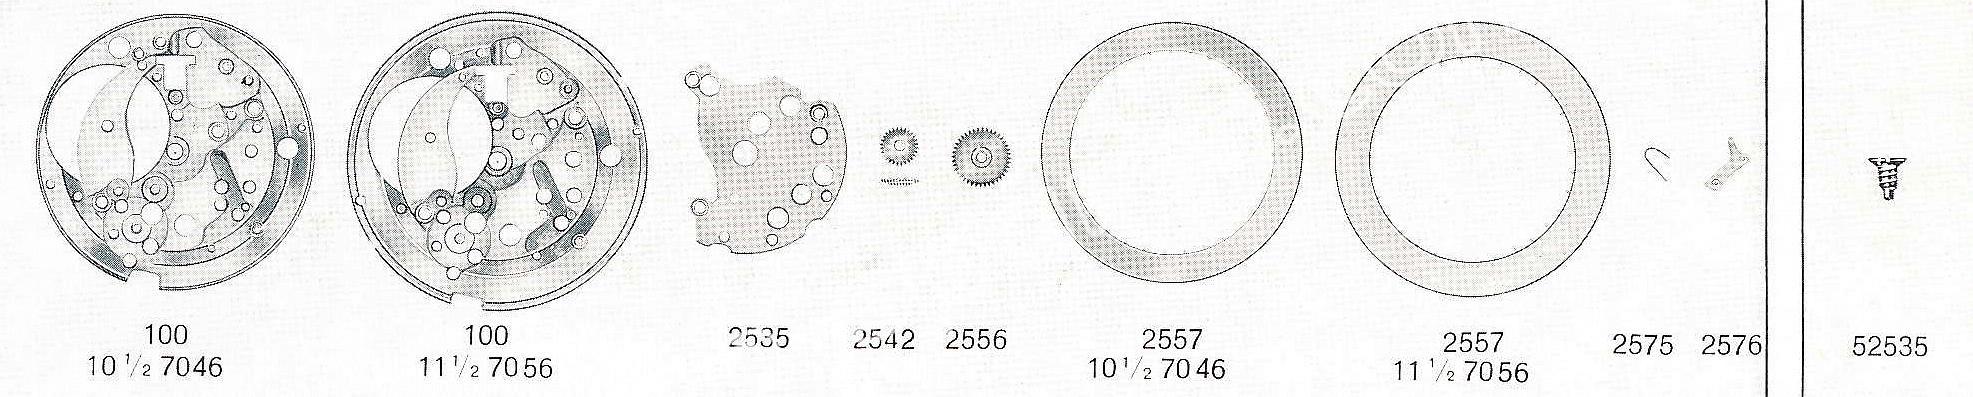 Enicar AR 112 watch date parts